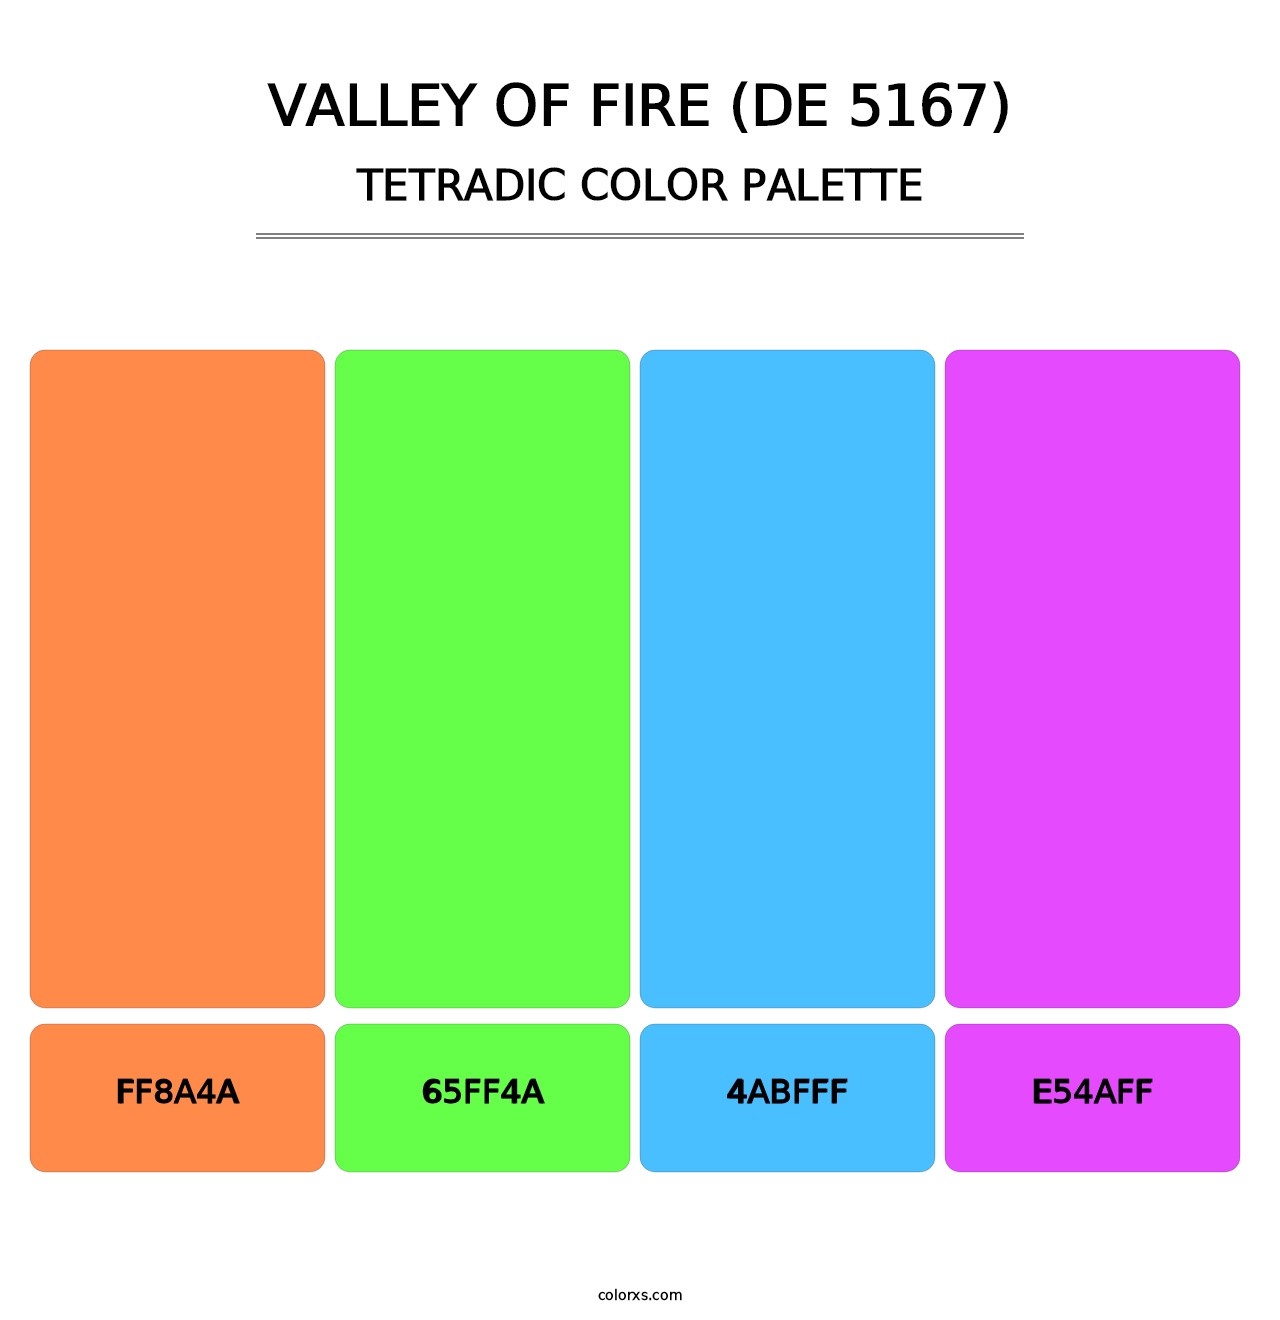 Valley of Fire (DE 5167) - Tetradic Color Palette